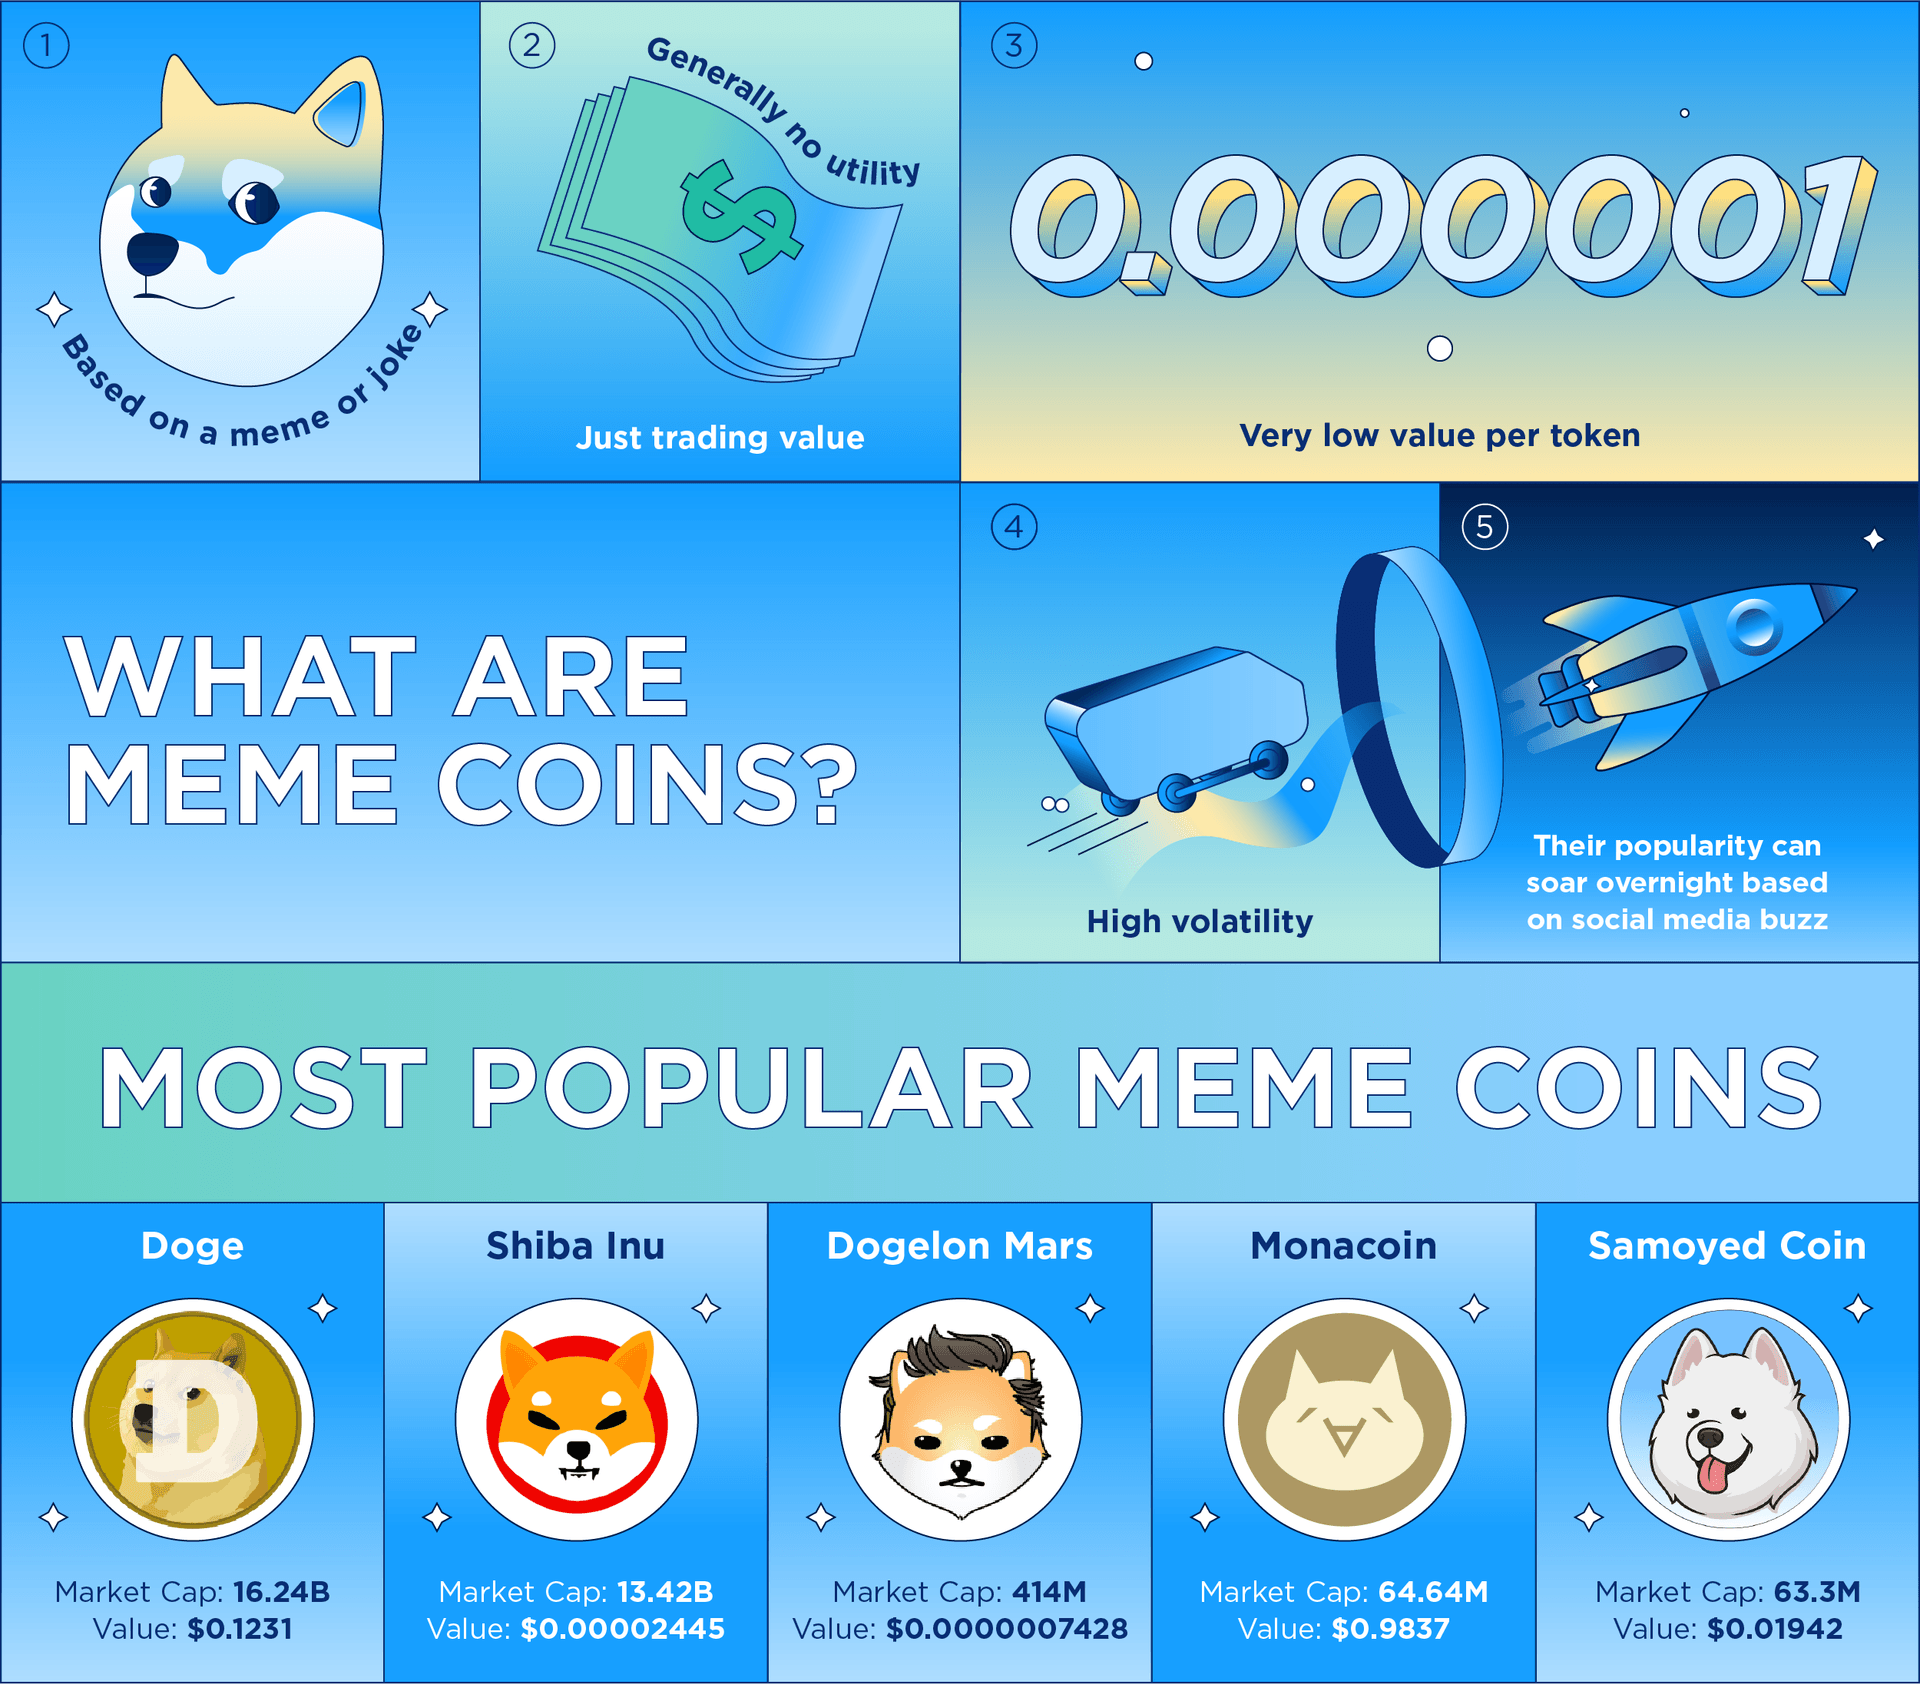 Most popular meme coins